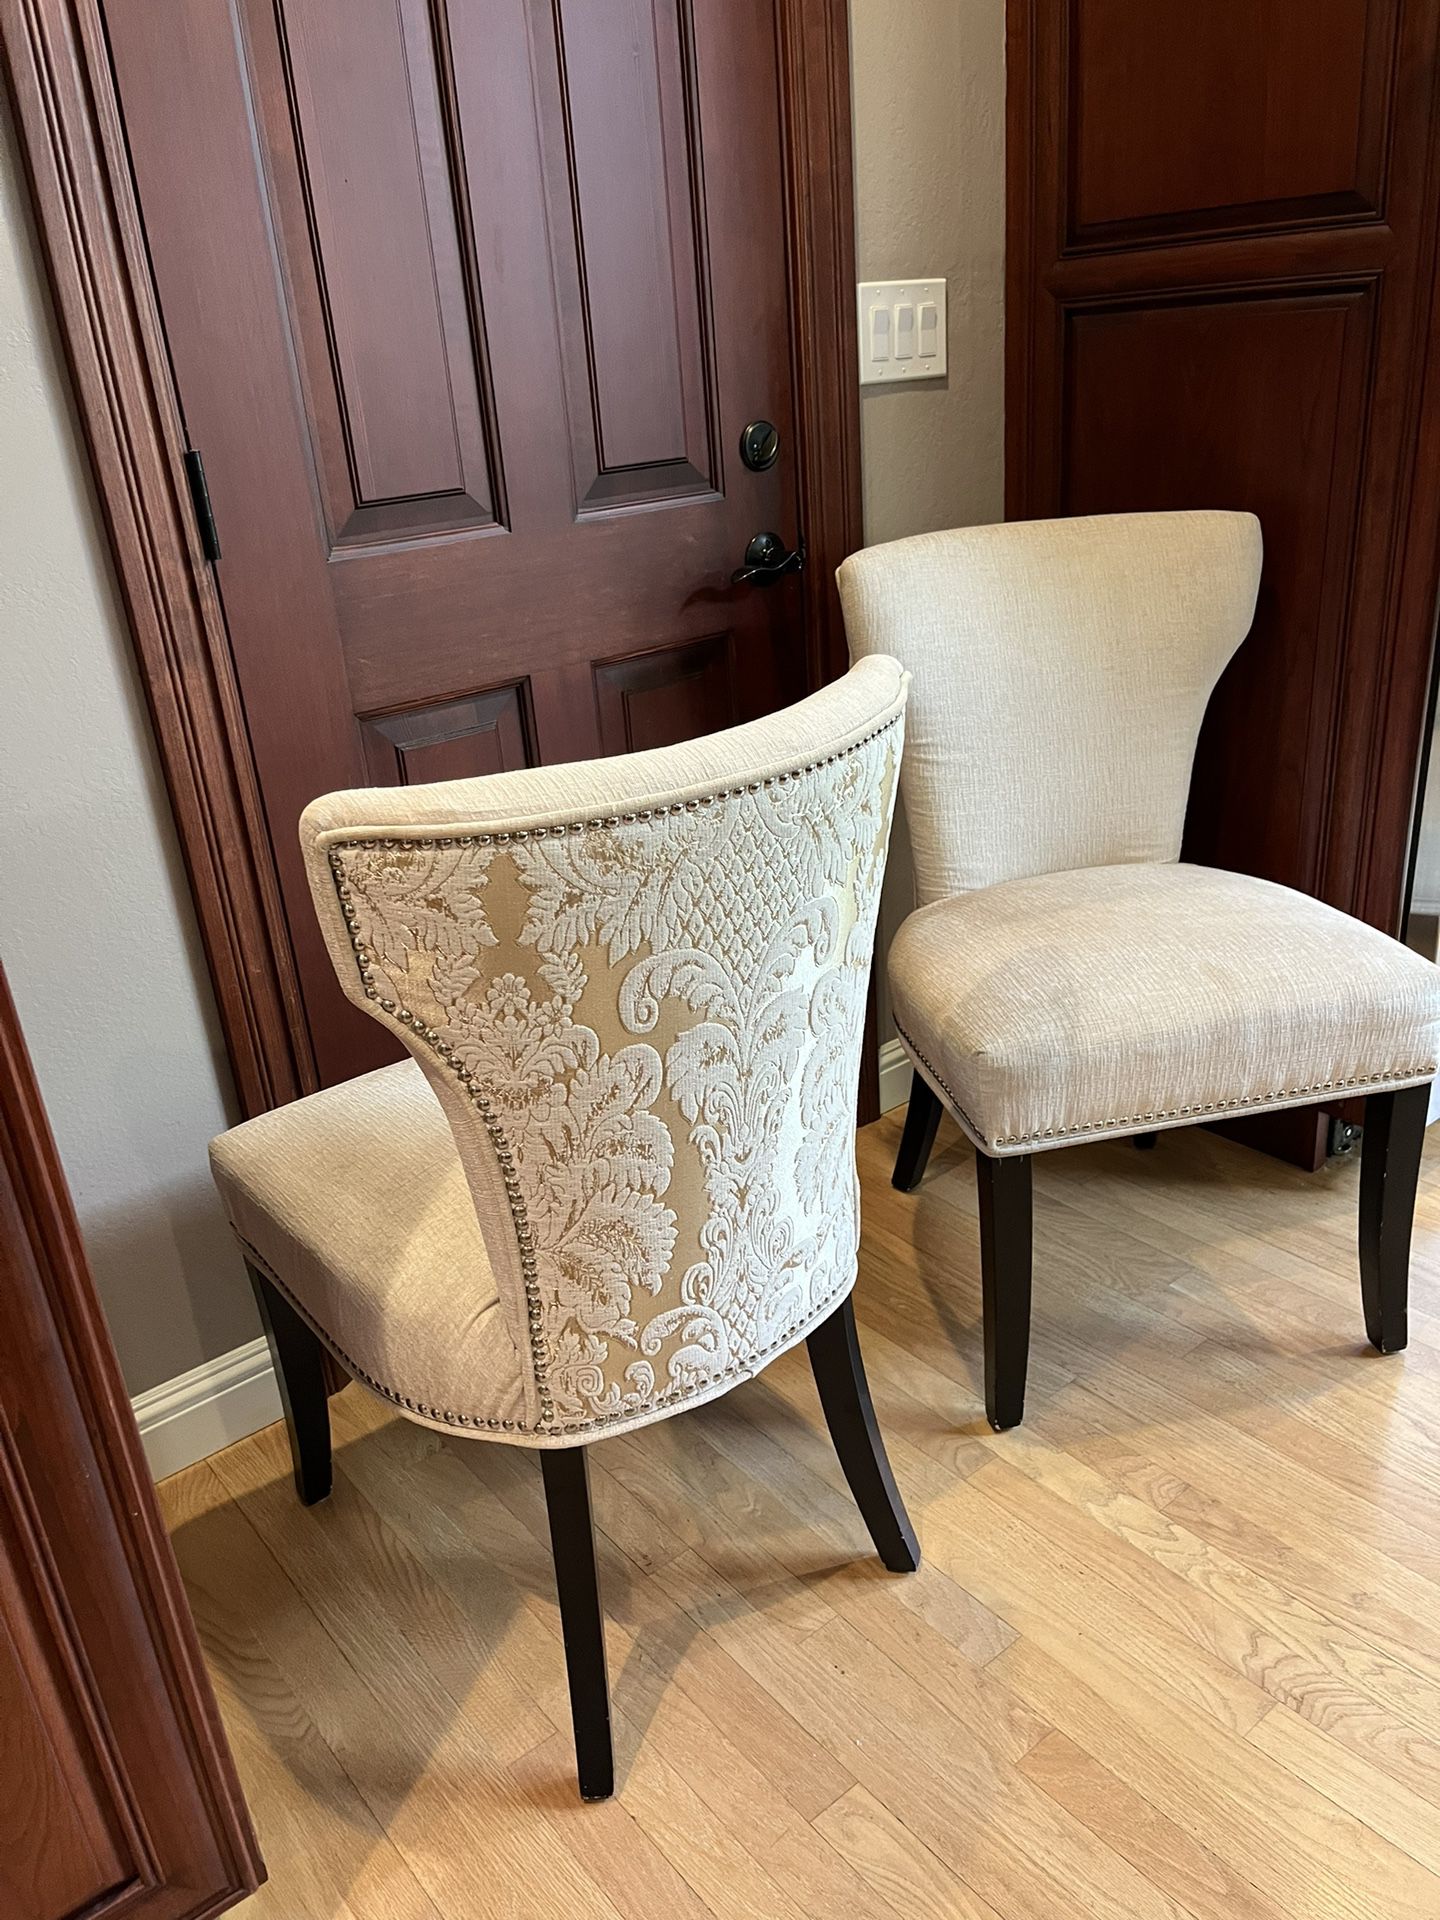 Dining Chairs (2), Ivory/cream Fabric